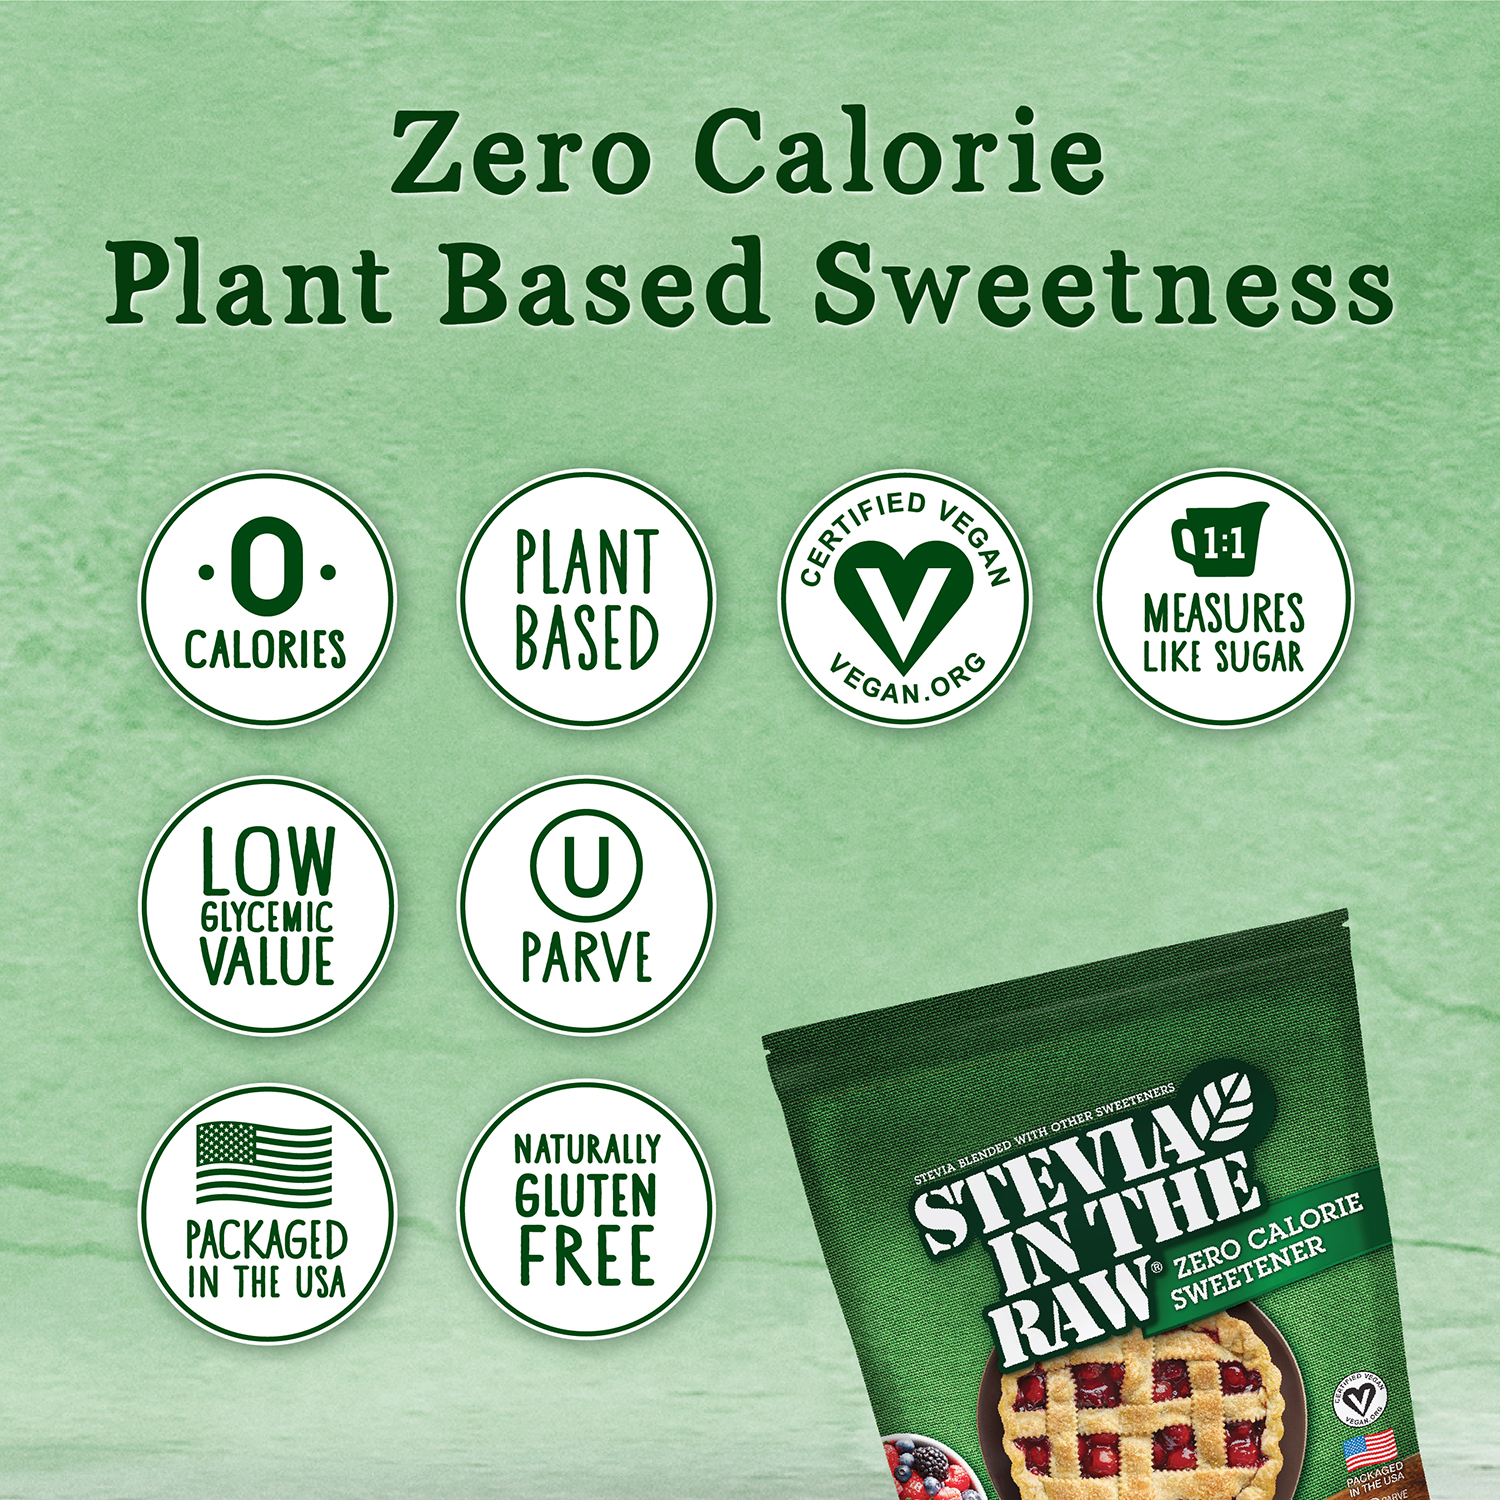 Stevia In The Raw Zero Calorie Sweetener, 9.7 oz - image 3 of 6